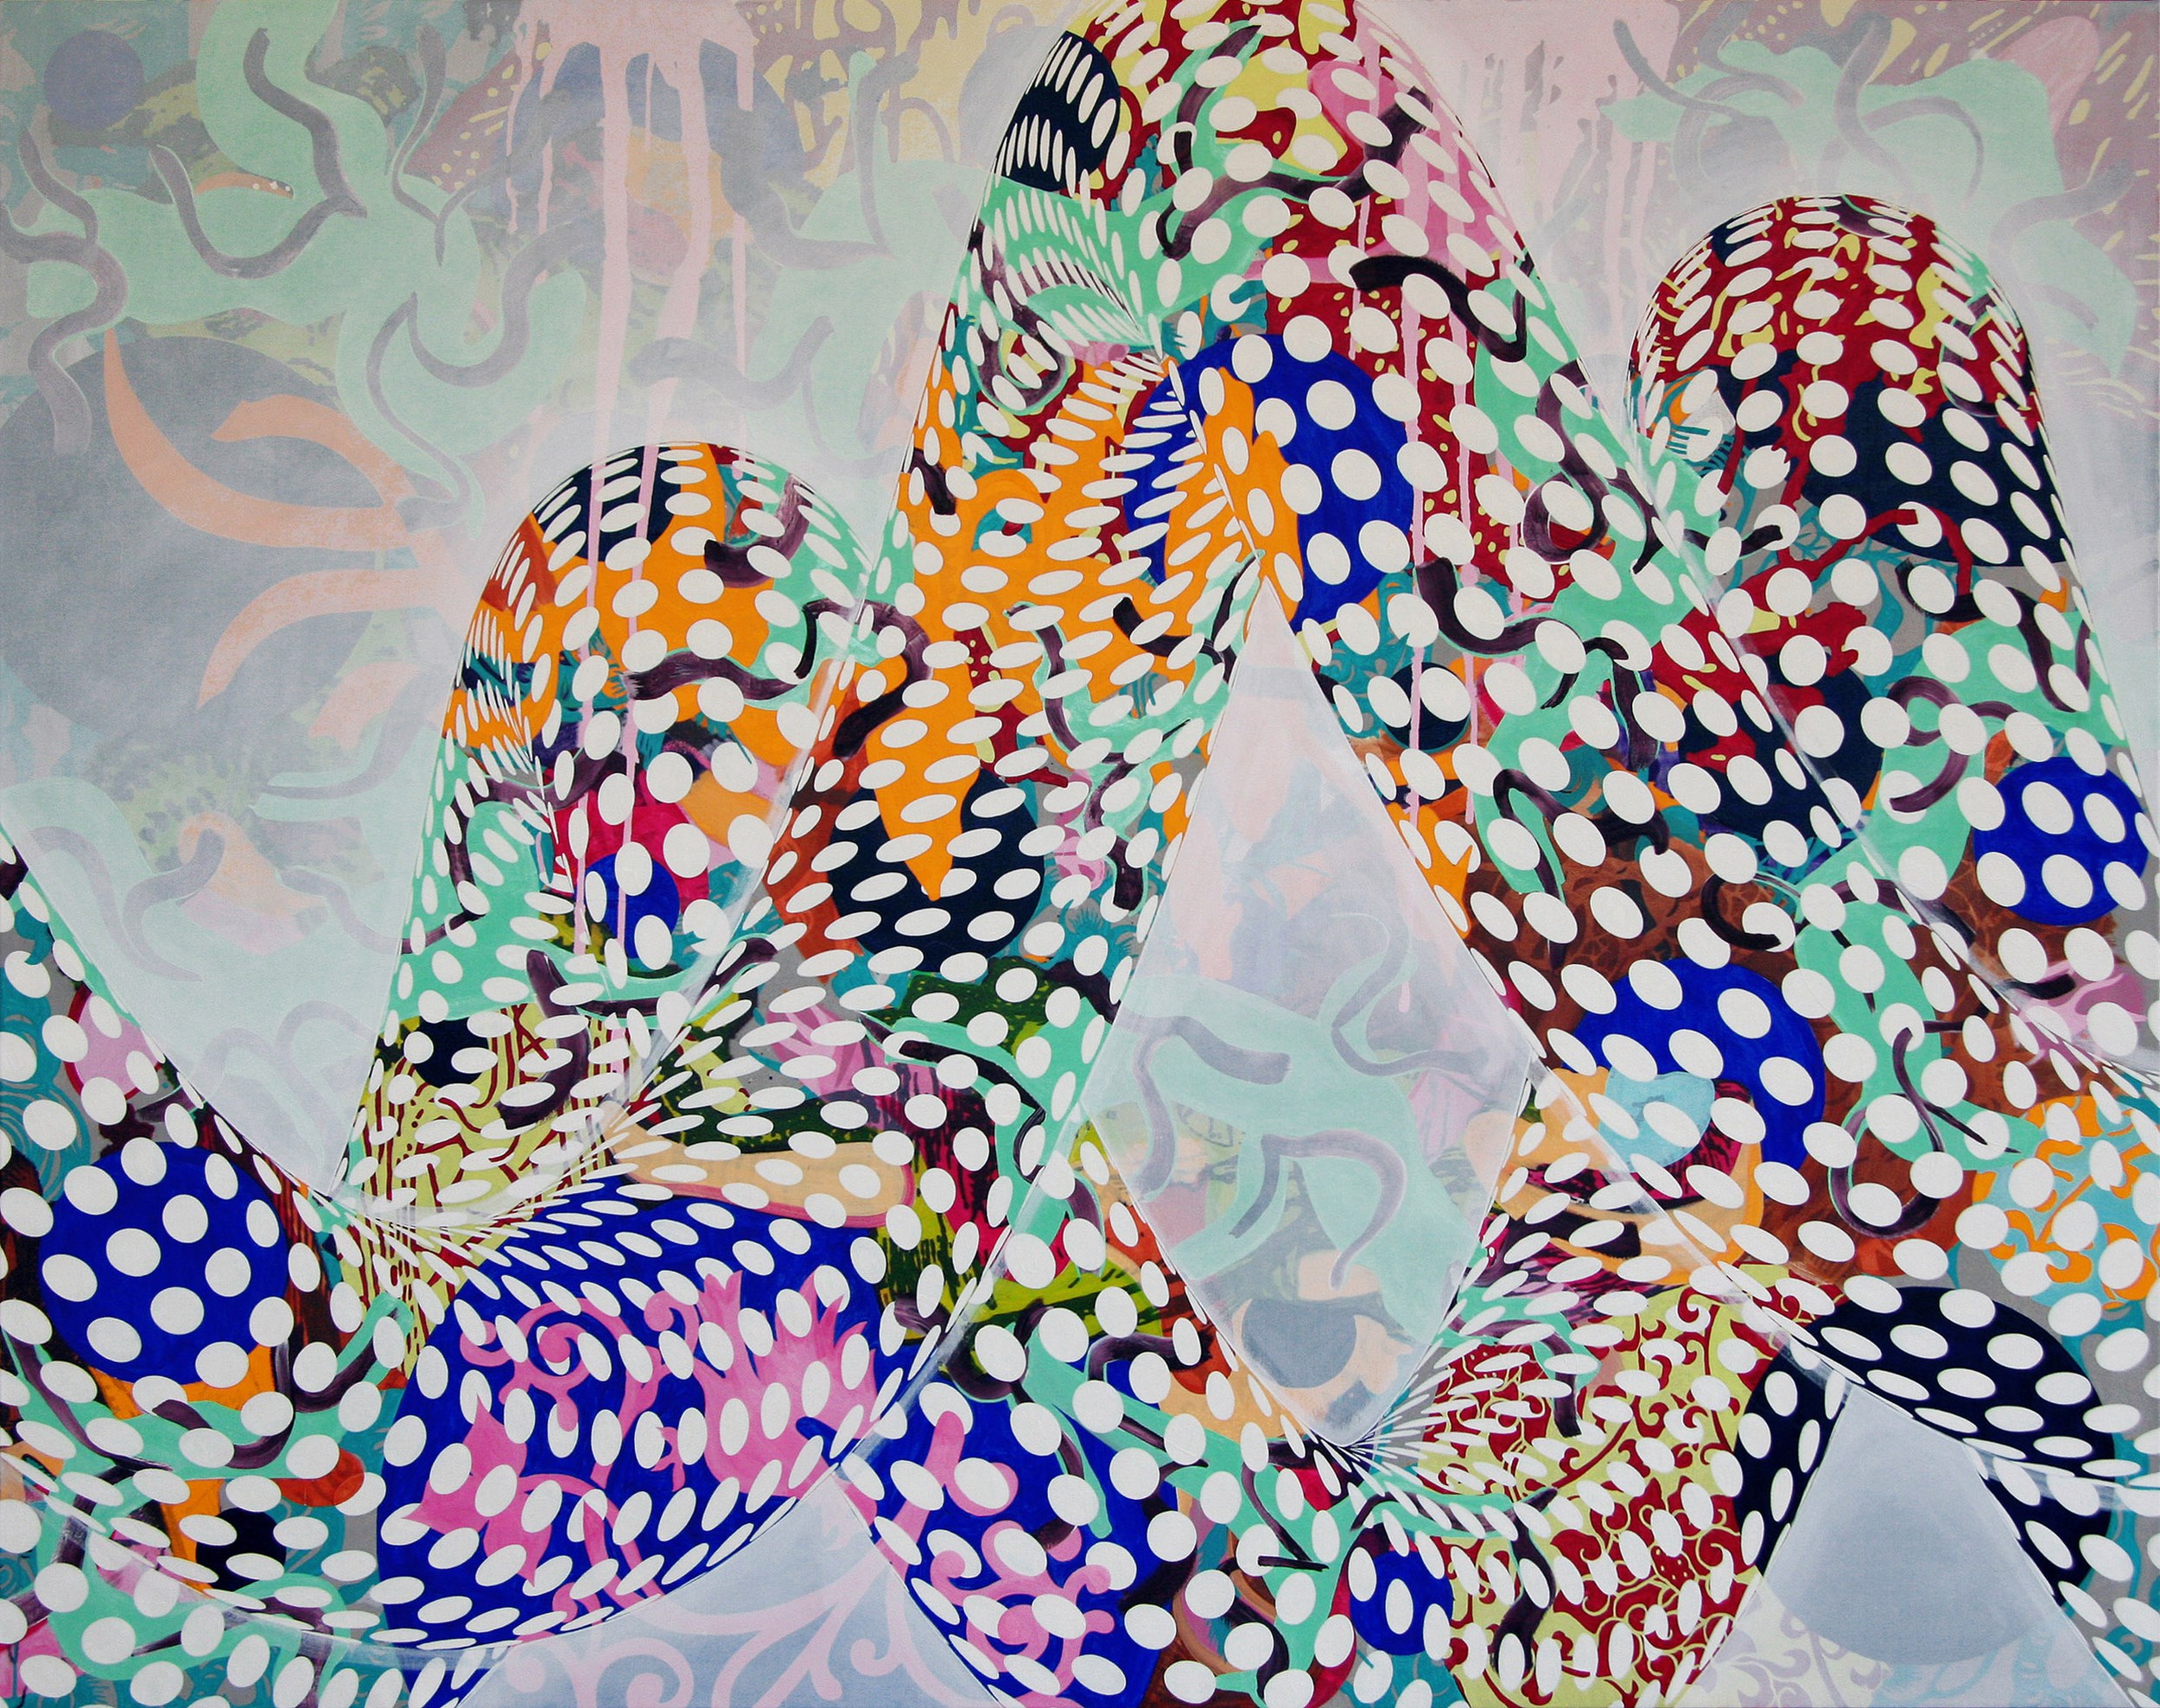 Loop #02, 2012, oil and acrylic on canvas, 185 x 232 cm.